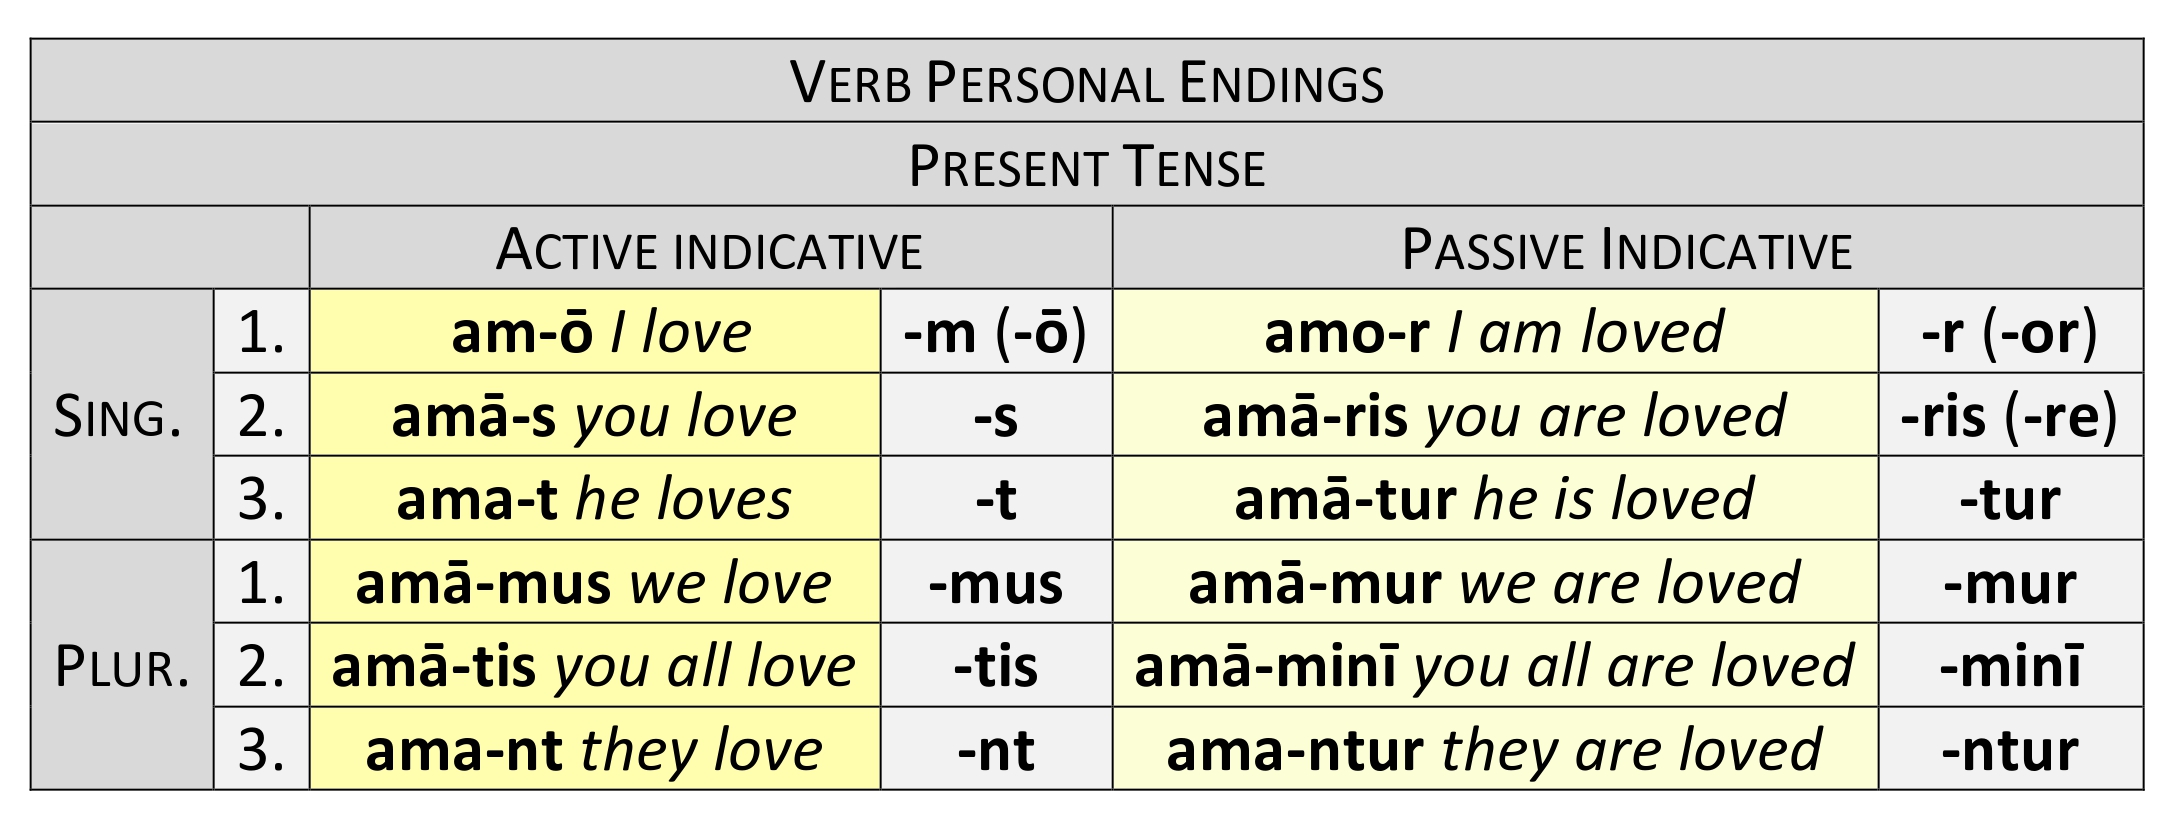 Verb personal endings present tense